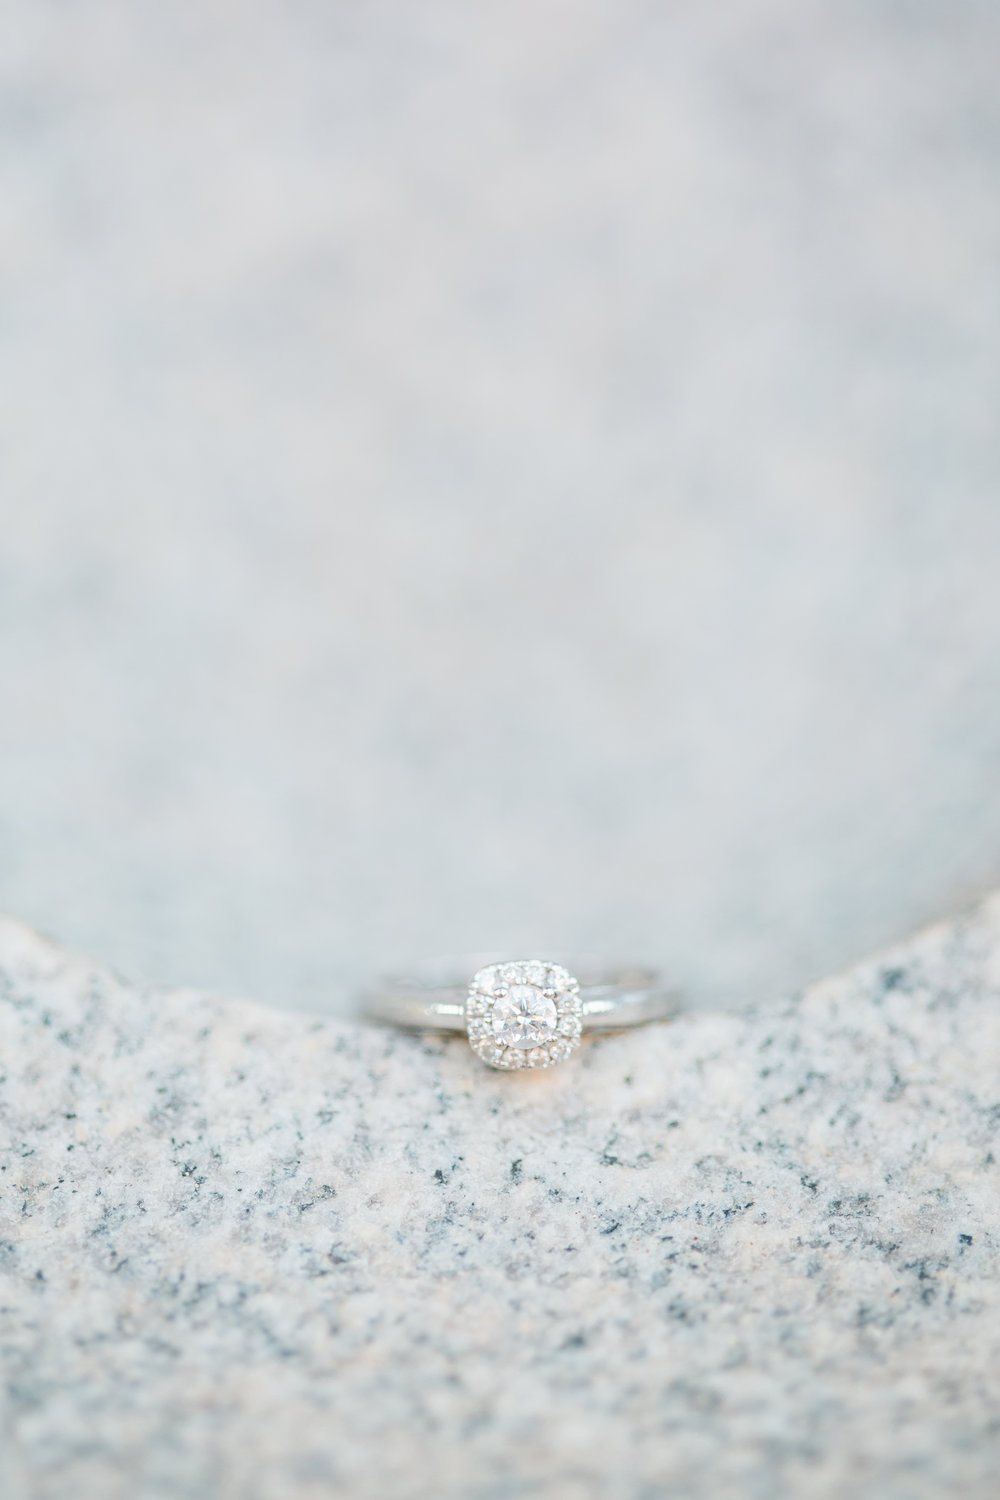 Wedding Ring on Stone